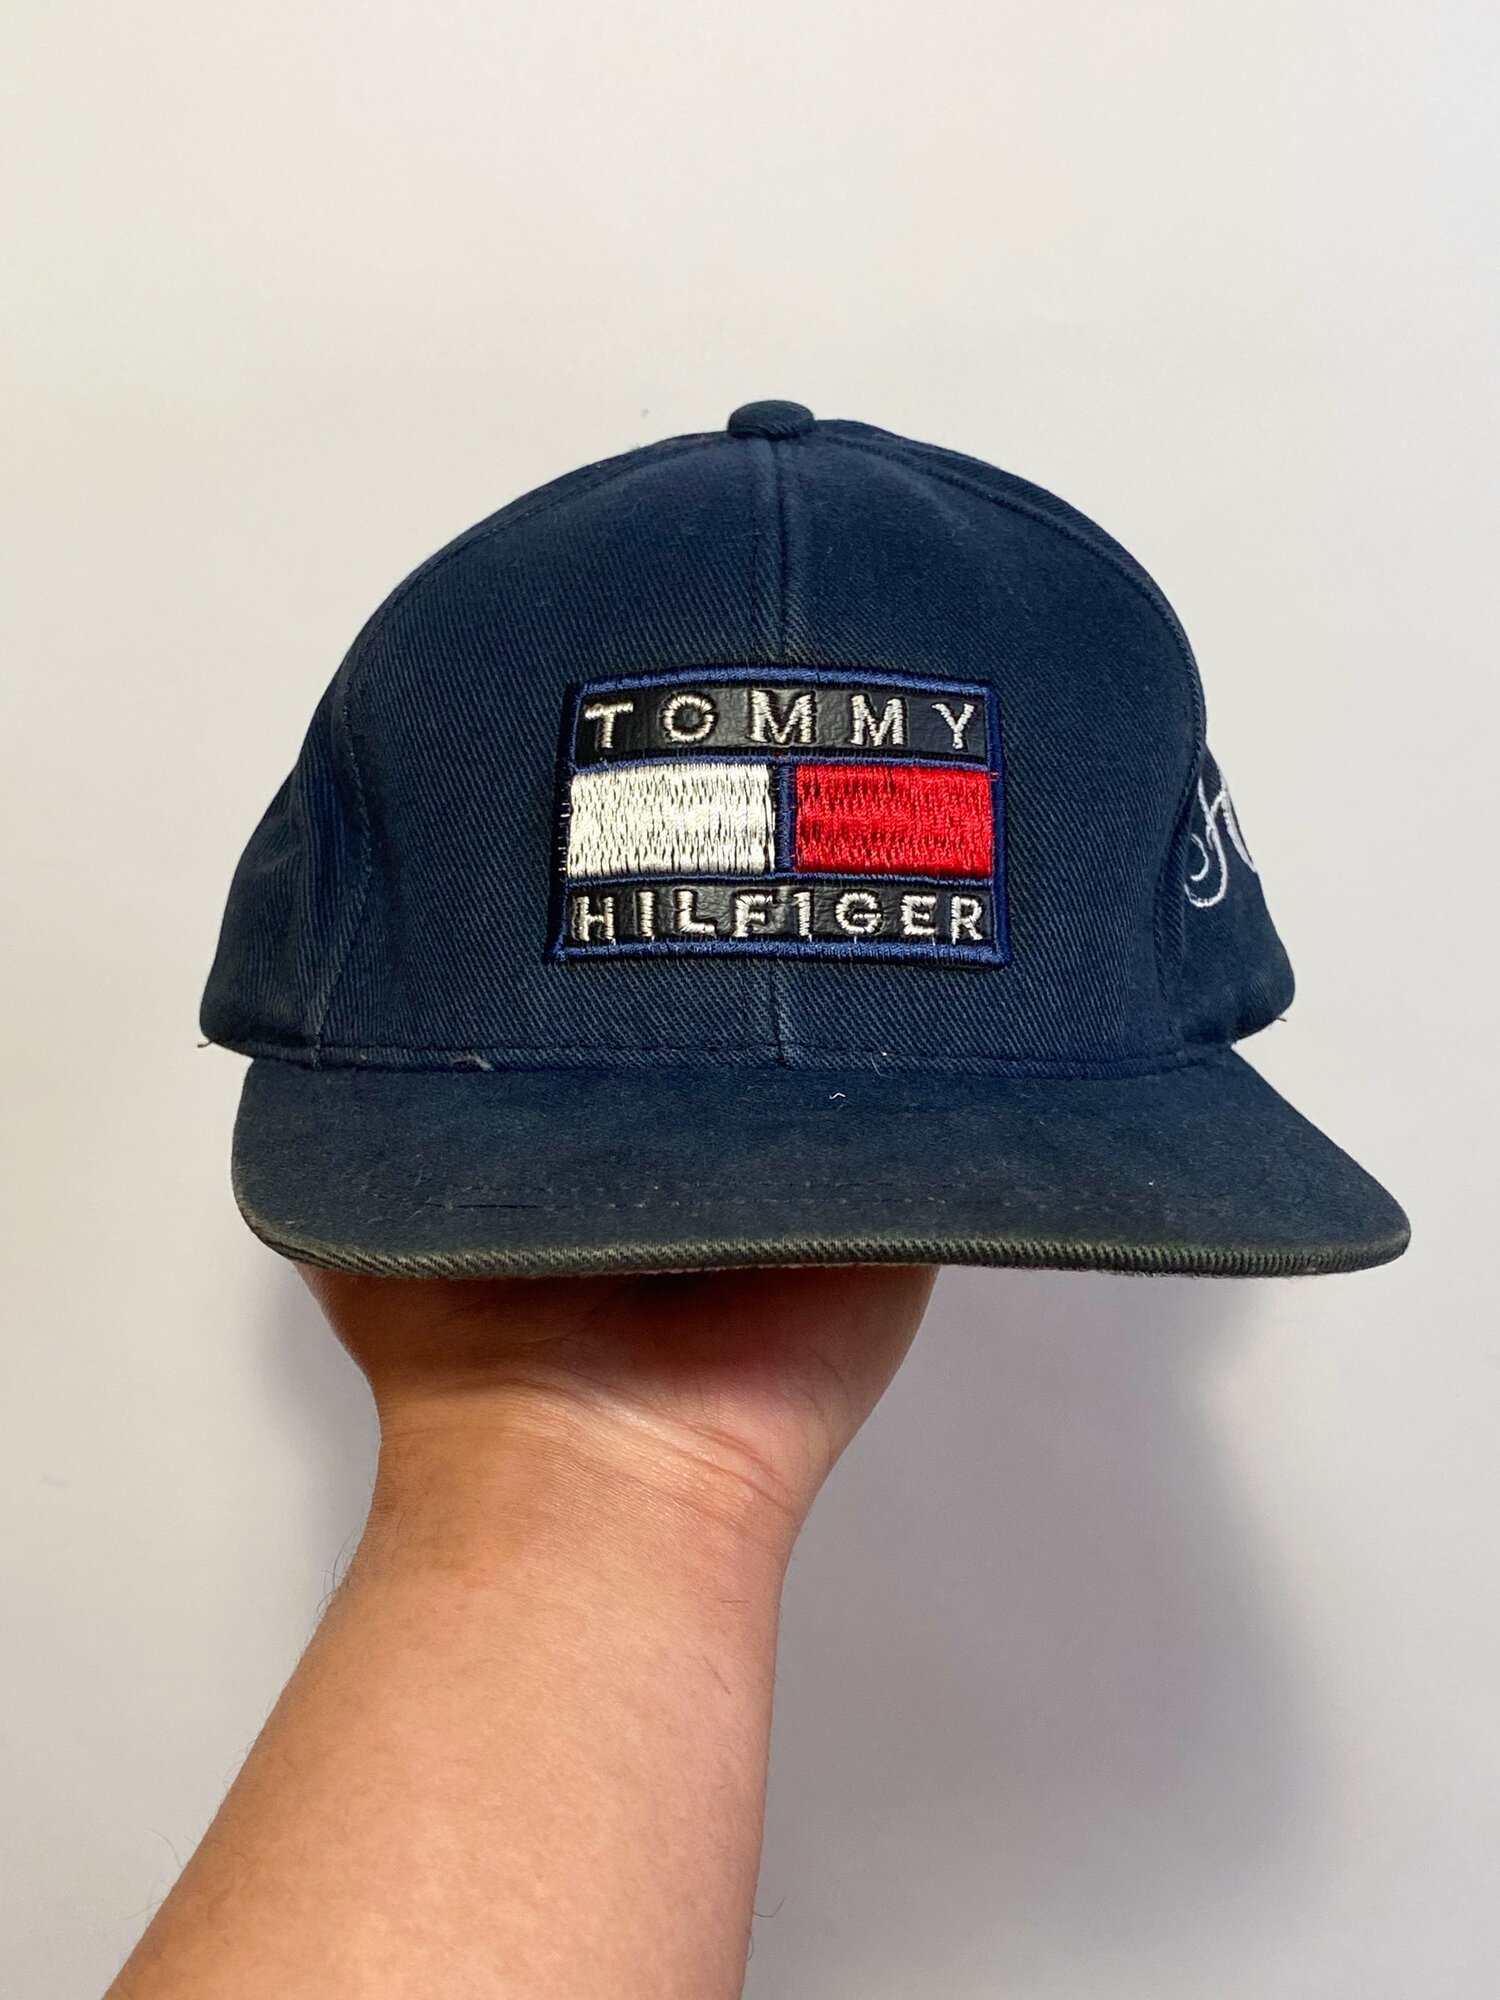 wind — thrift Hat Bootleg Hilfiger Embroidered second Tommy Logo